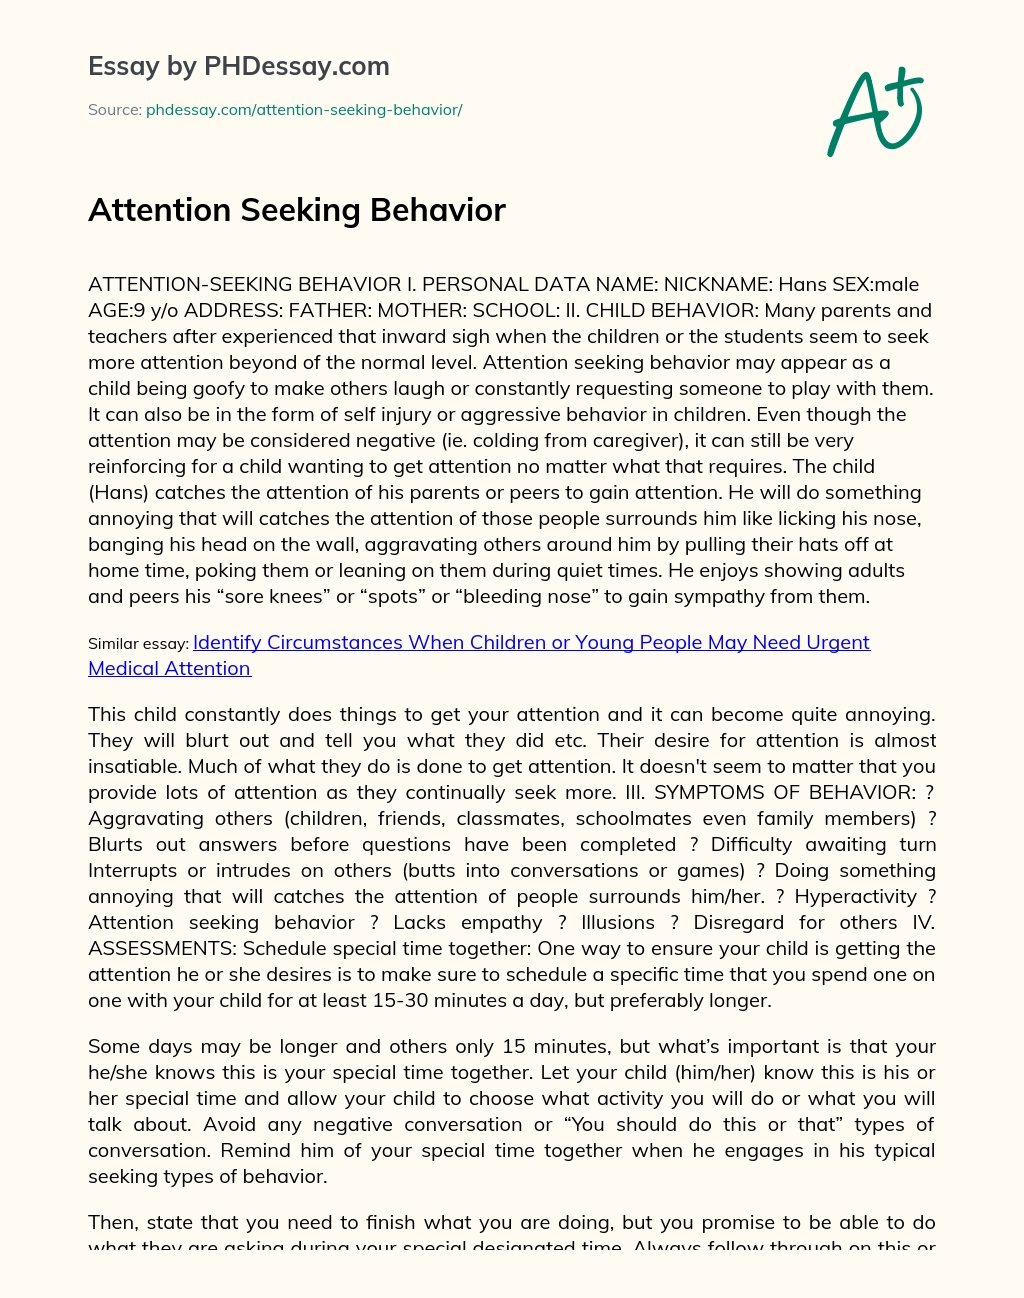 Attention Seeking Behavior essay